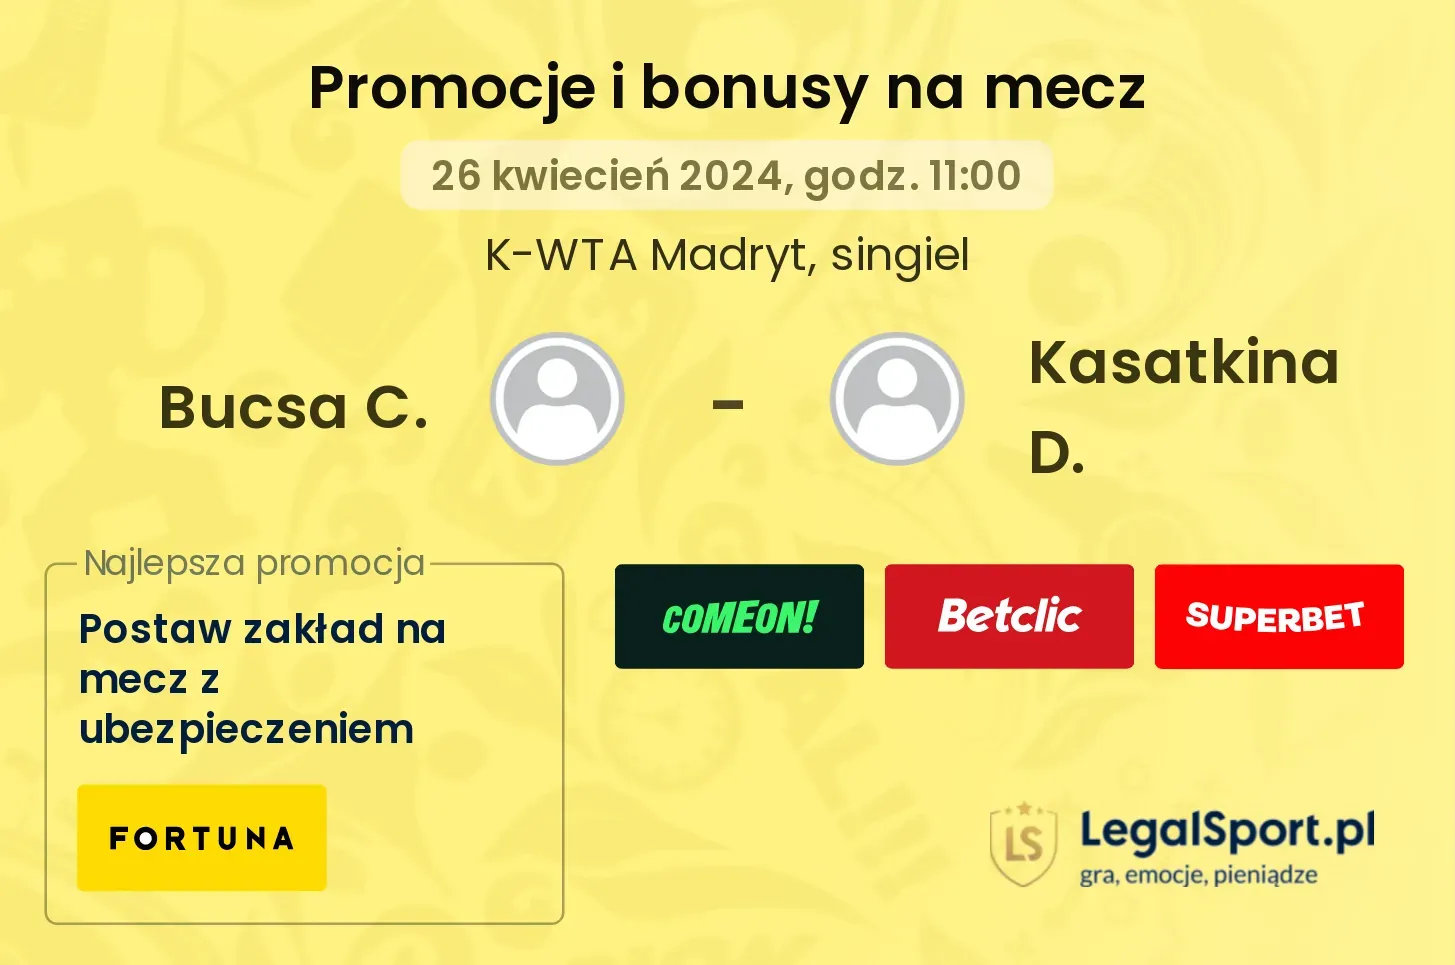 Bucsa C. - Kasatkina D. promocje bonusy na mecz